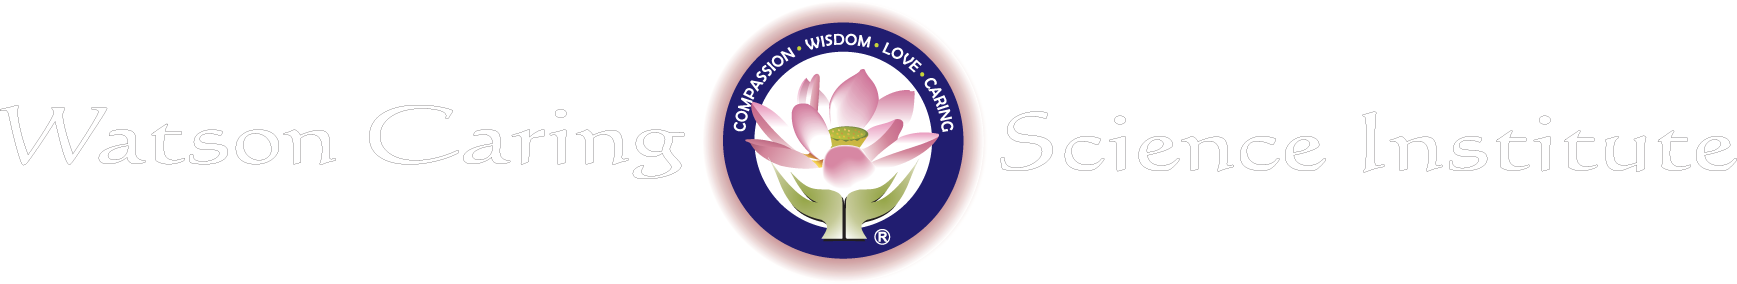 Watson Caring Science Institute logo